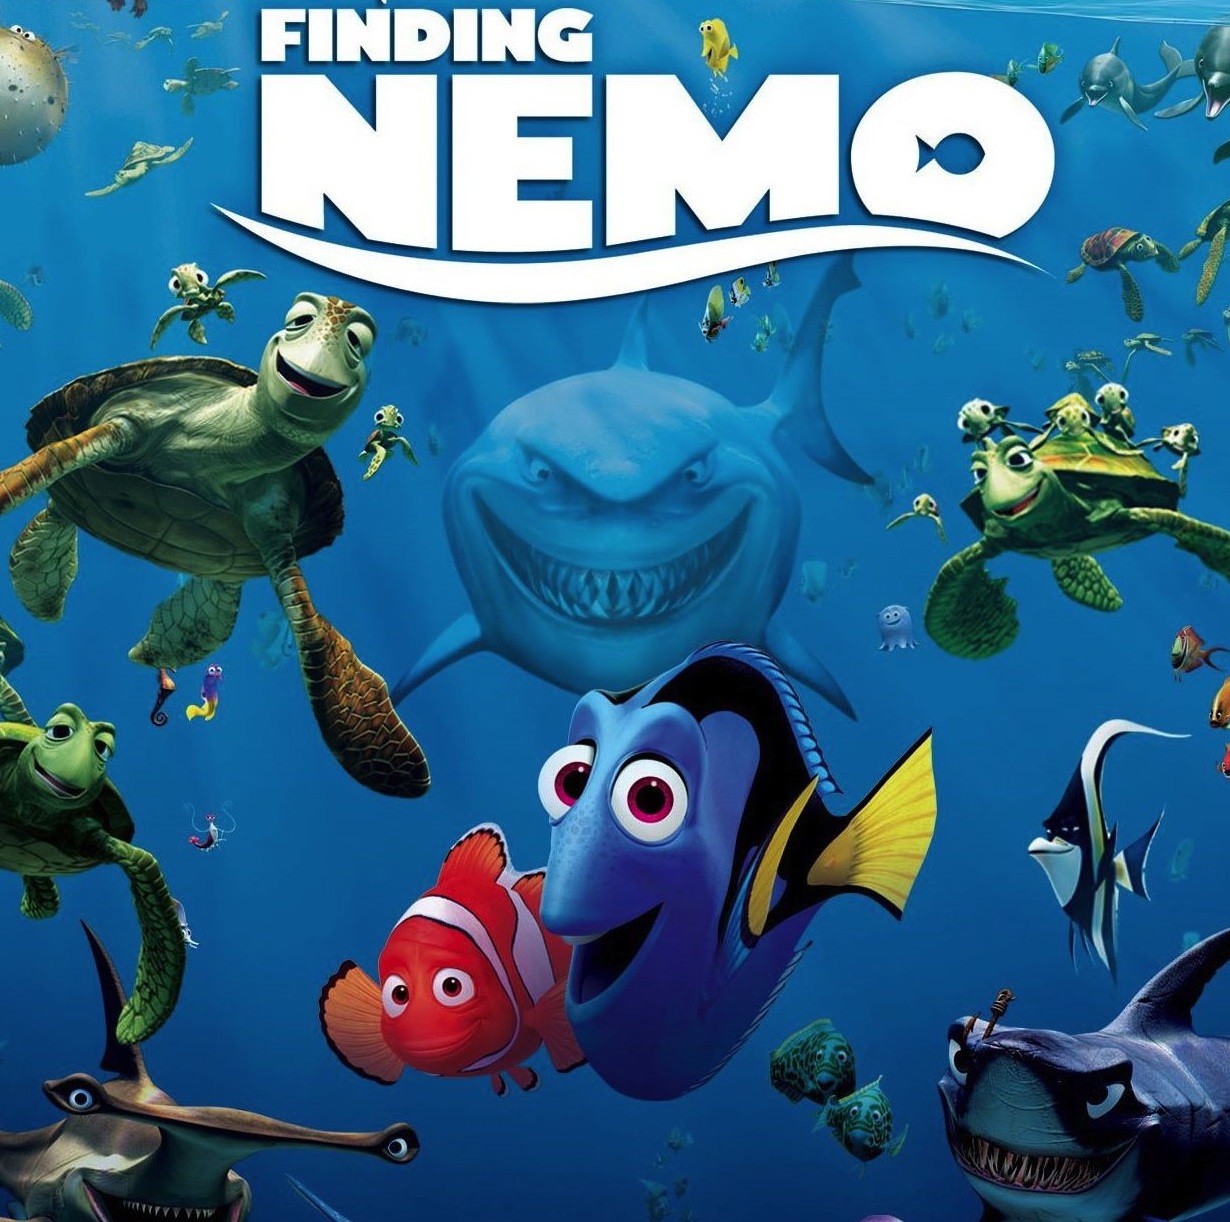 Play Finding Nemo on GBA - Emulator Online.